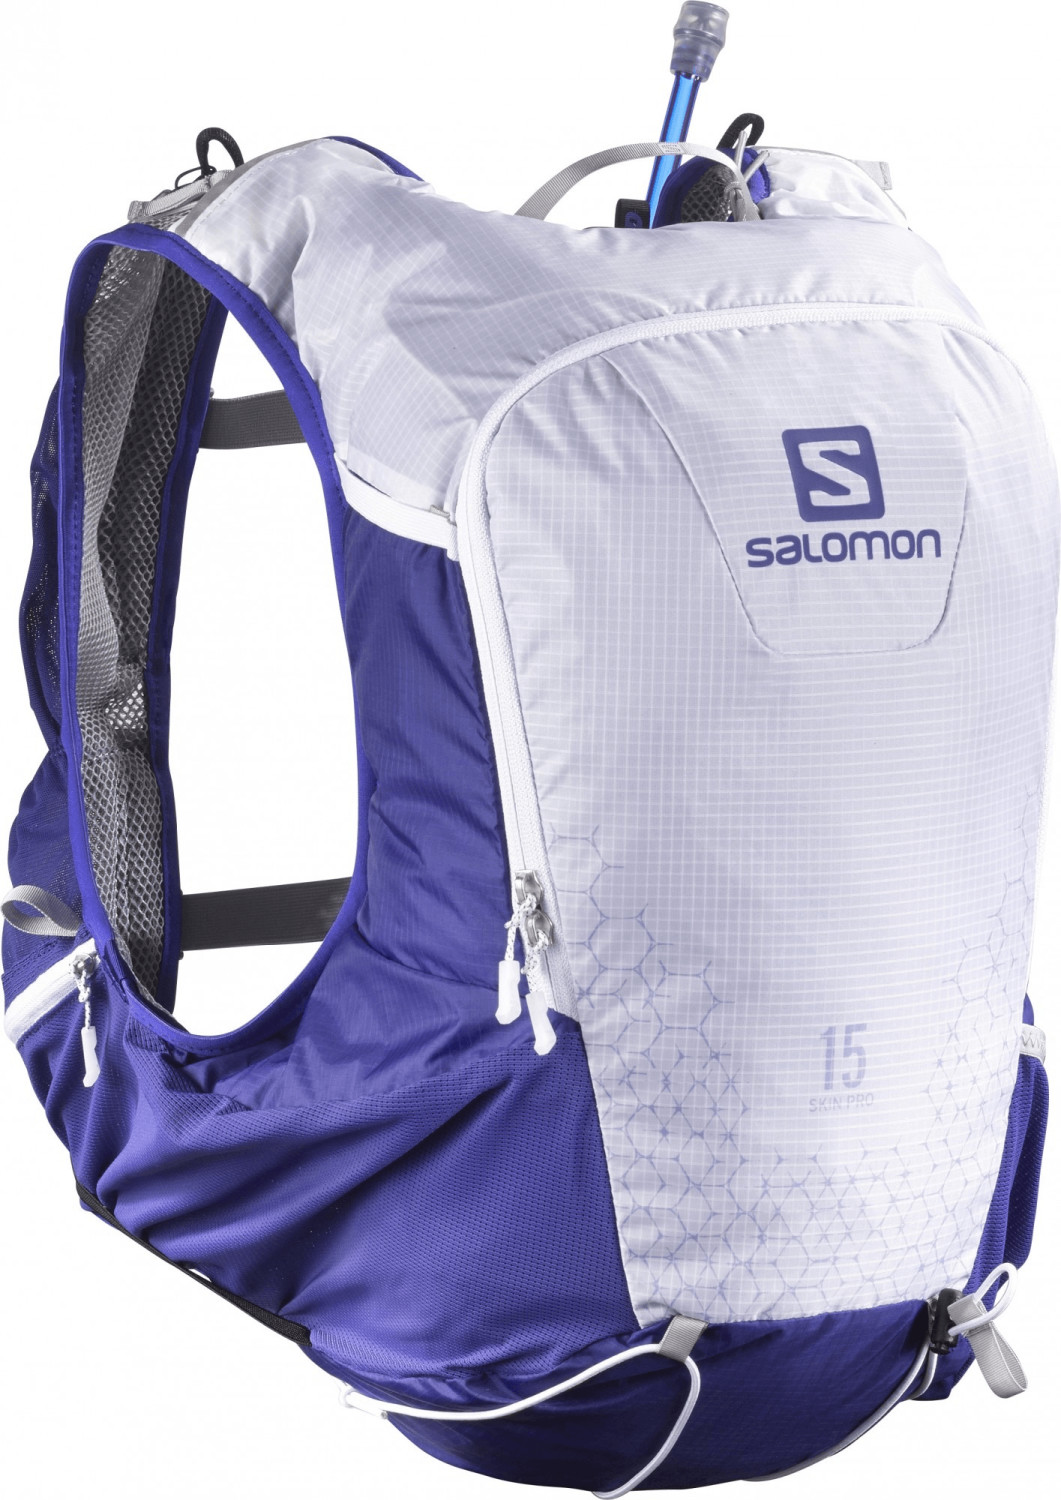 Salomon Skin Pro 15 Set spectrum blue/white